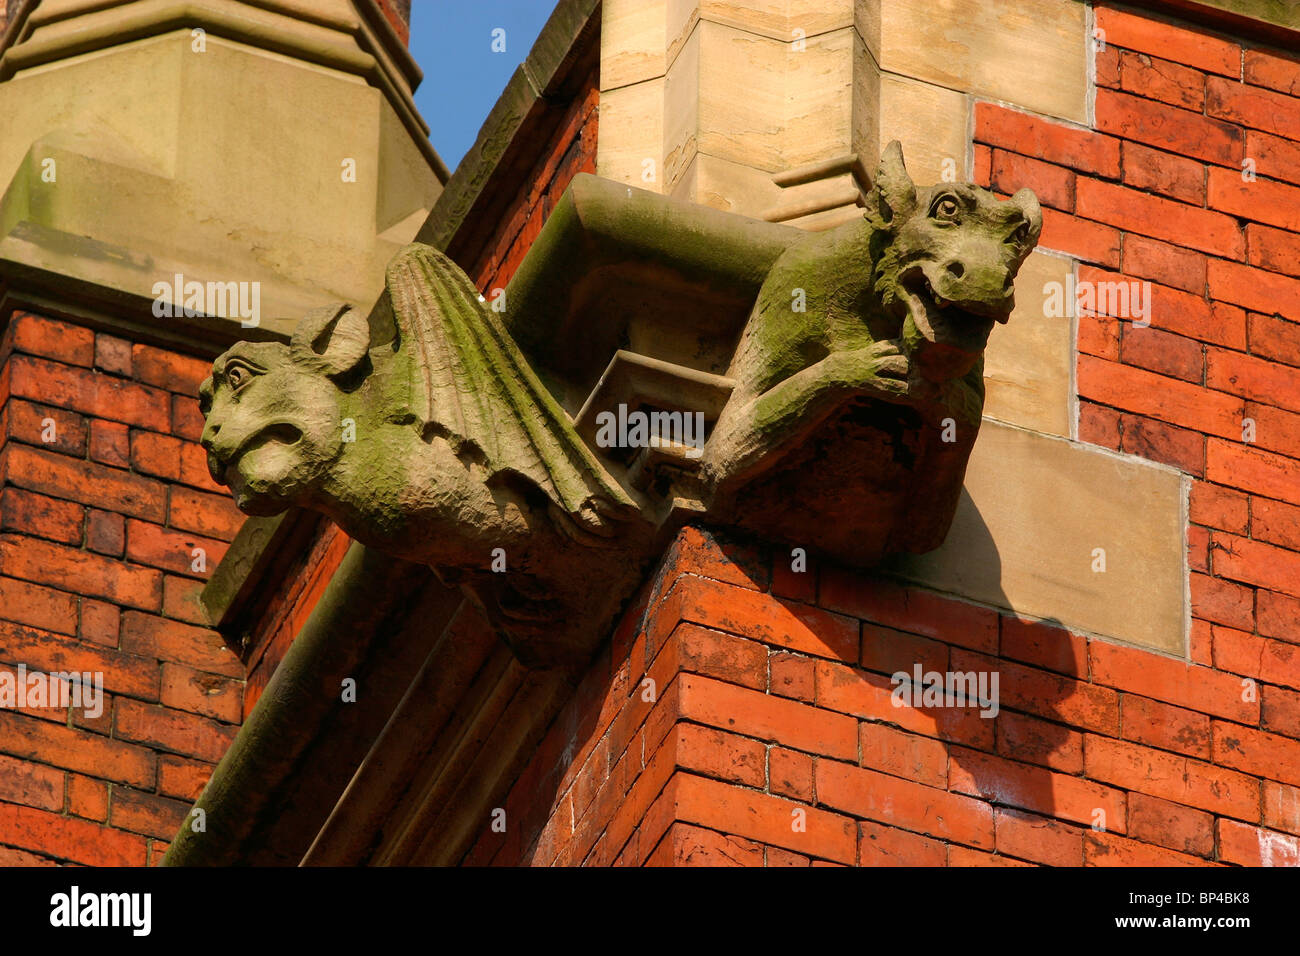 UK, England, Cheshire, Stockport, Cheadle, Abney Hall, architectural detail, of gargoyles Stock Photo